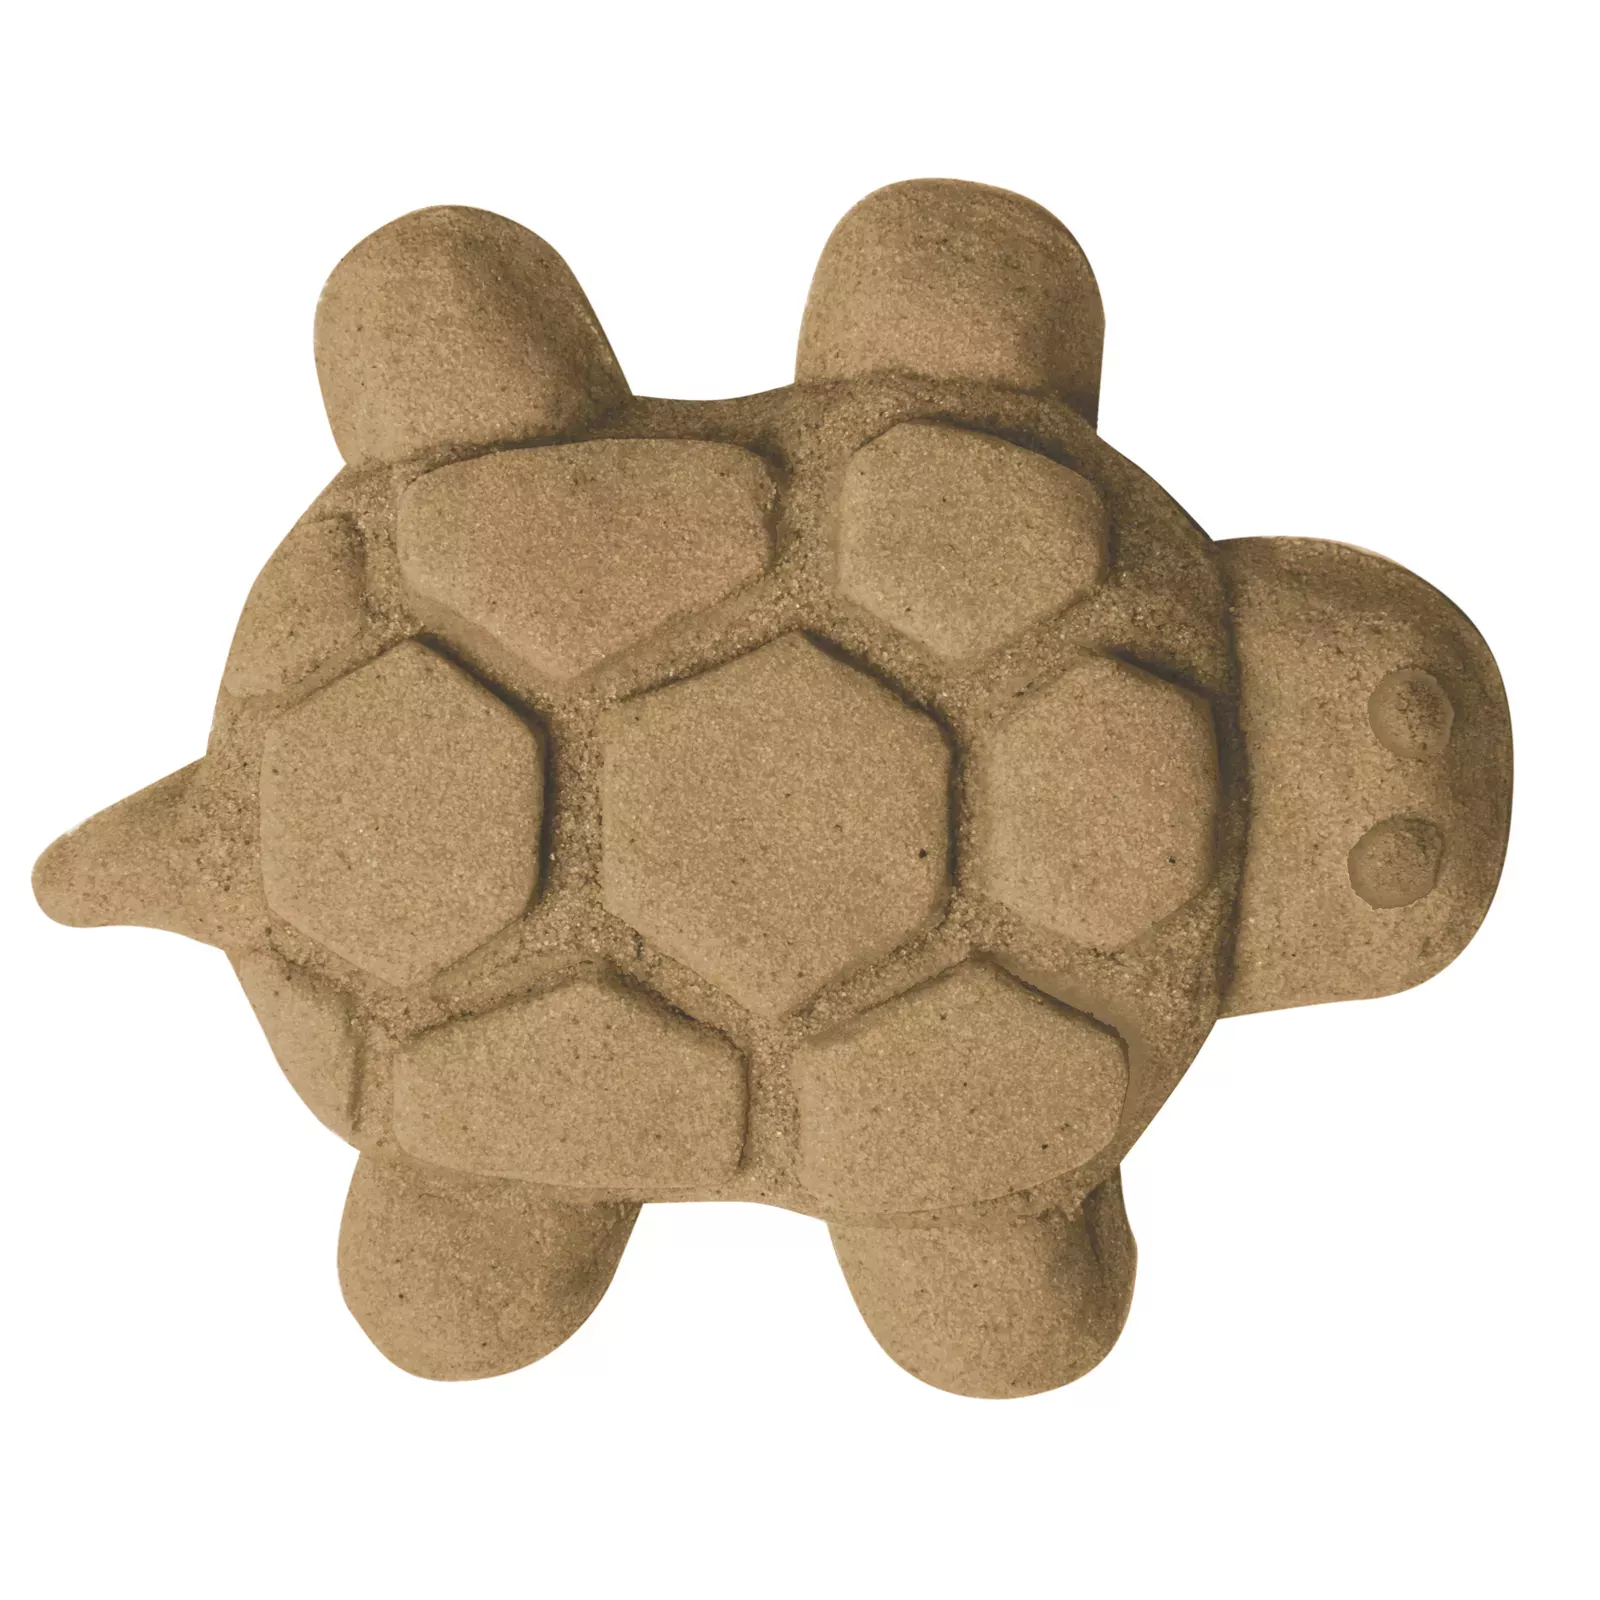 Kinetic Sand, The Original Moldable Sensory Play Sand, Pink, 2 lb.  Resealable Bag, Ages 3+ 